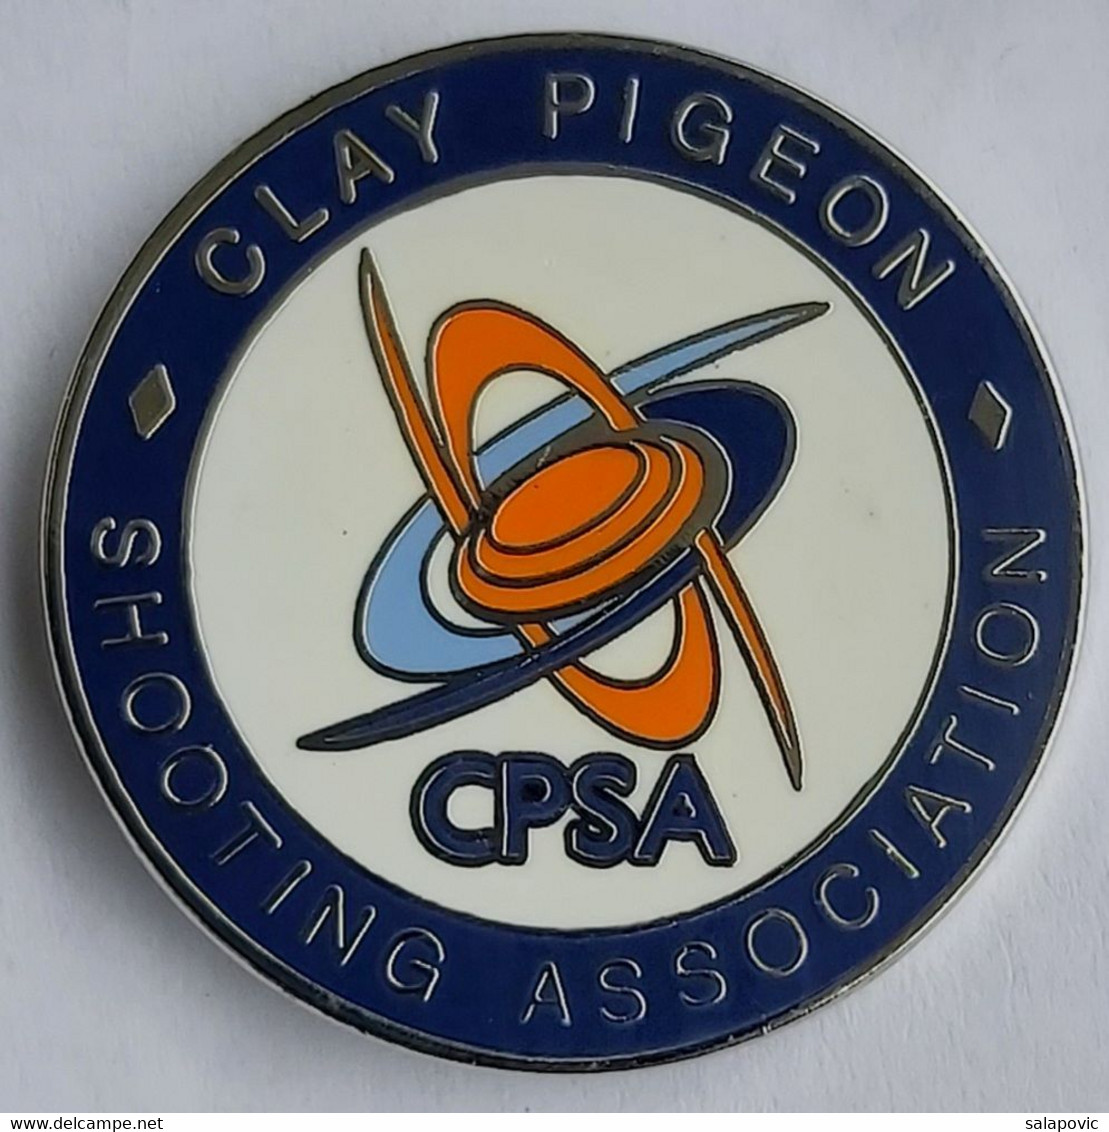 Clay Pigeon Shooting Association (CPSA) England PINS A5/4 - Tiro Al Arco